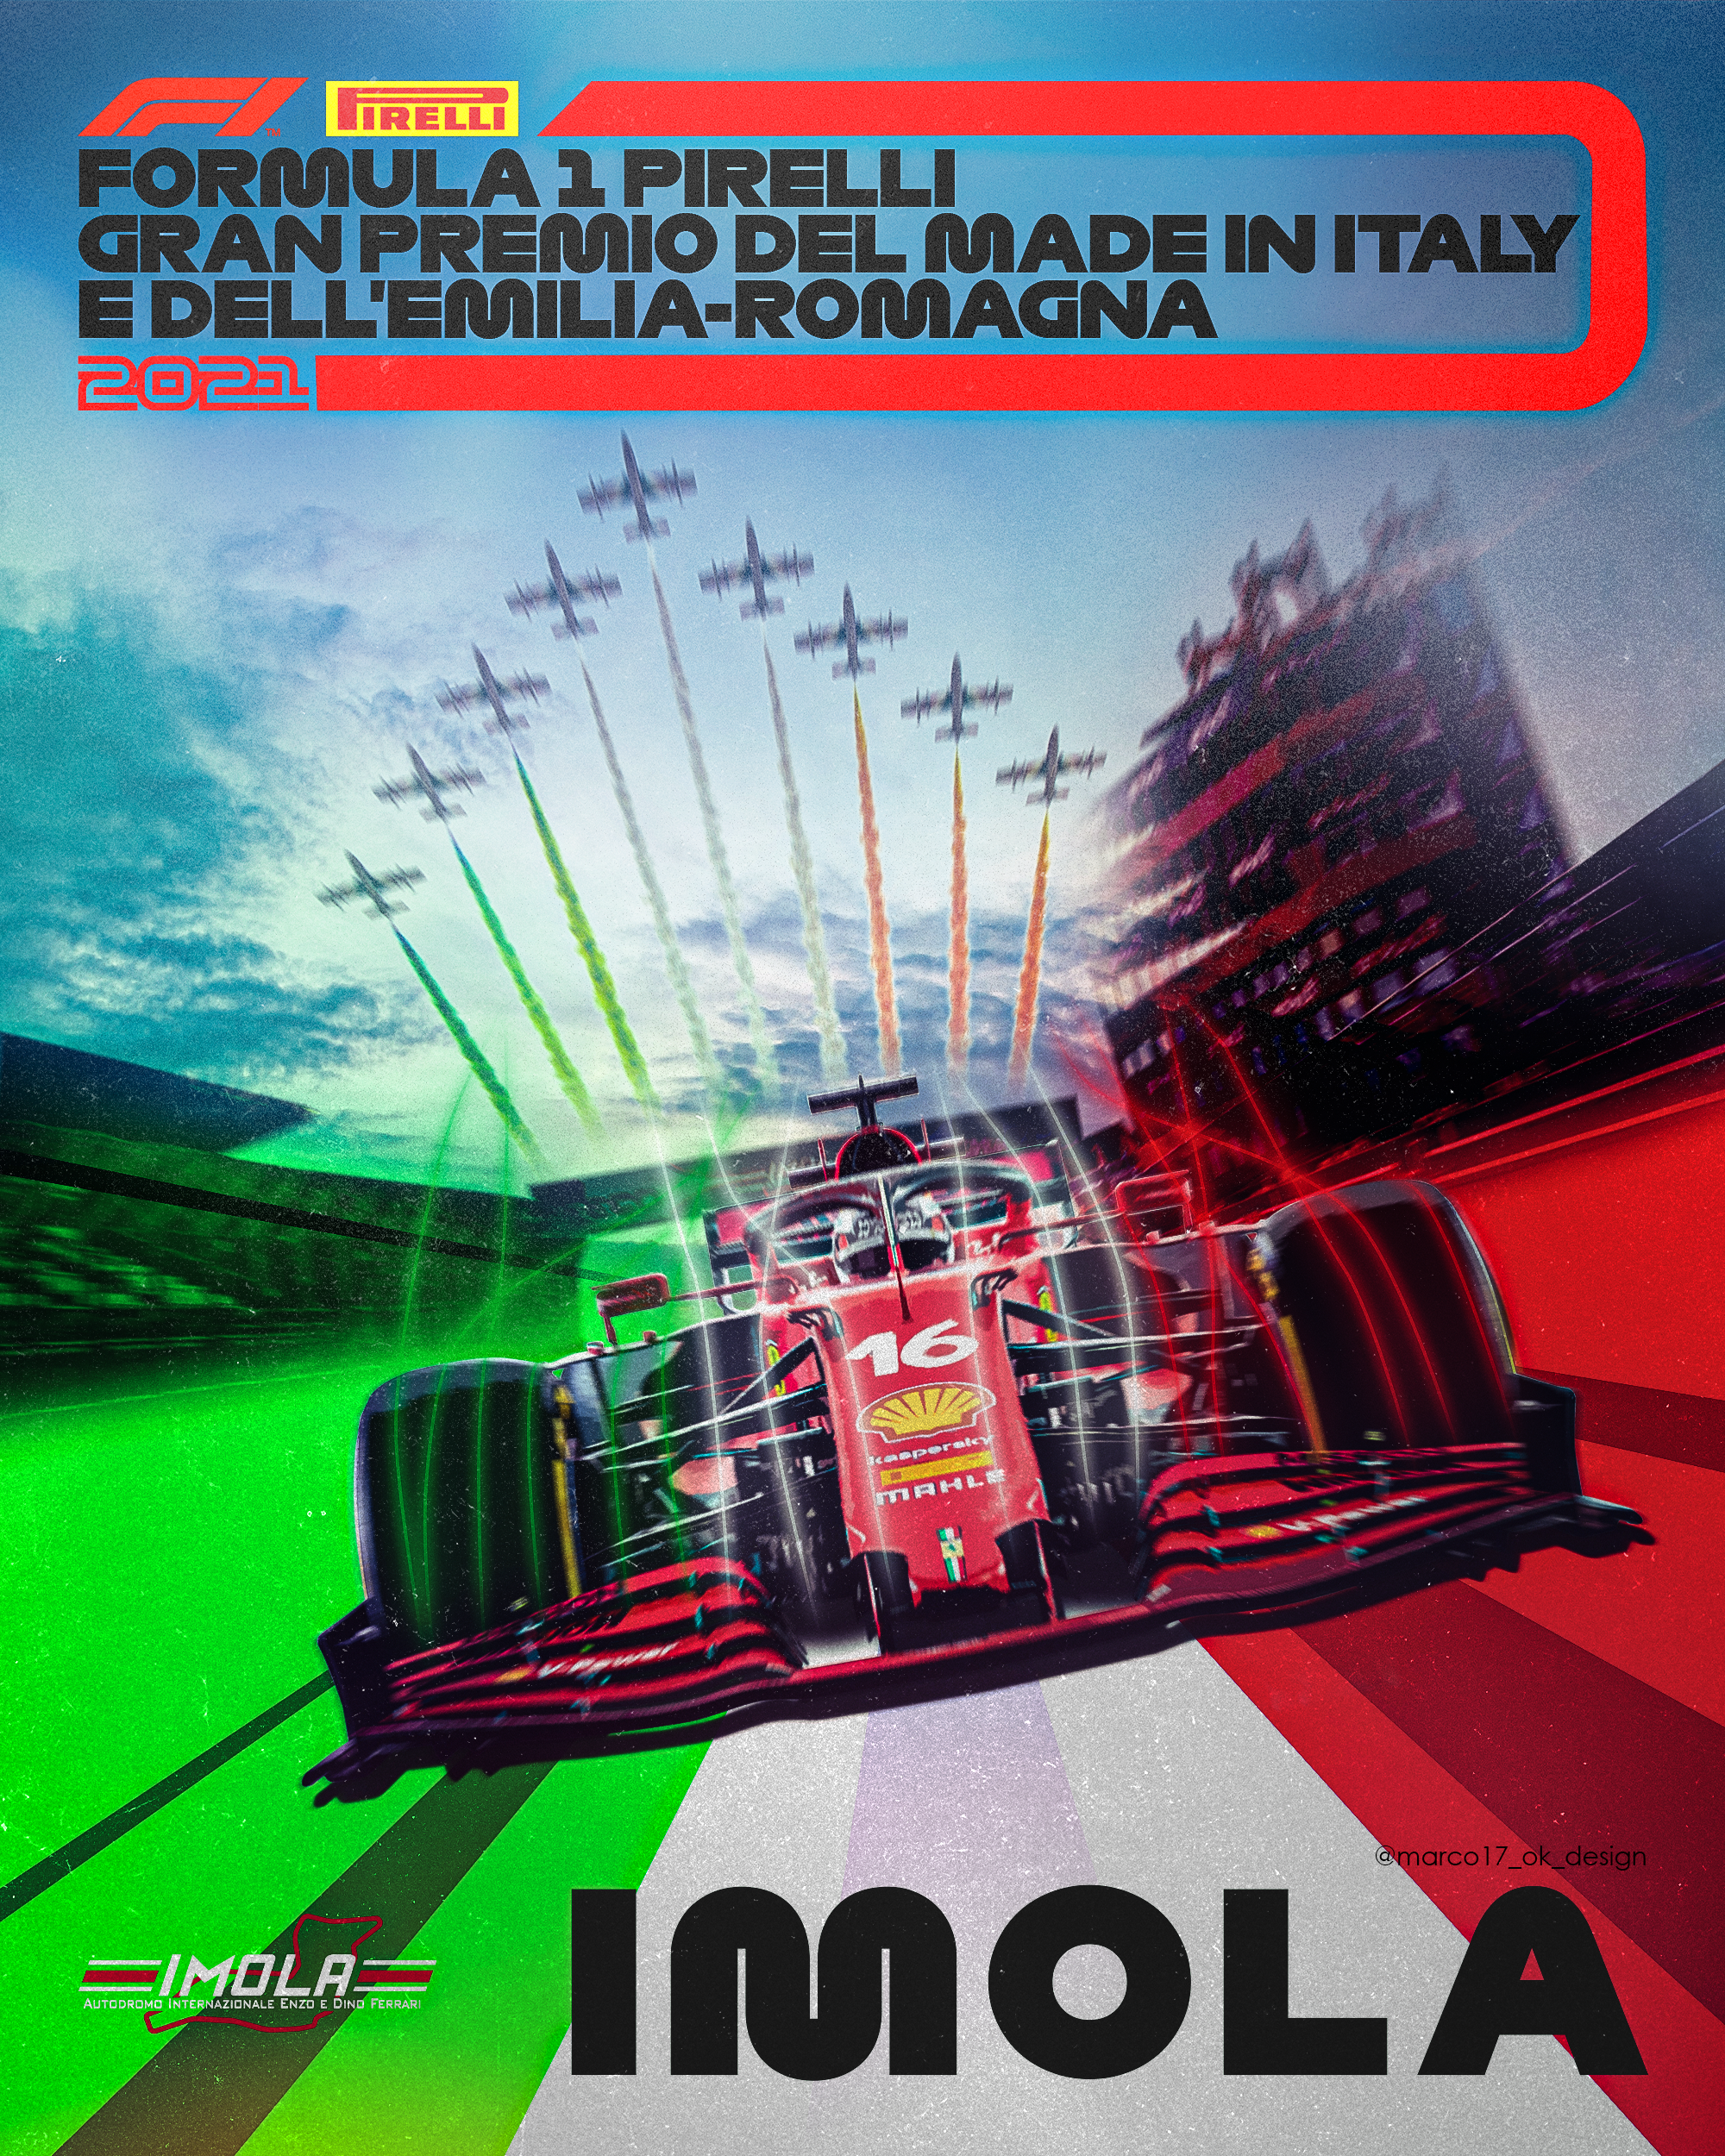 2021 F1 Imola Italian Grand Prix Ferrari Formula One Art Print Poster  22x17in #